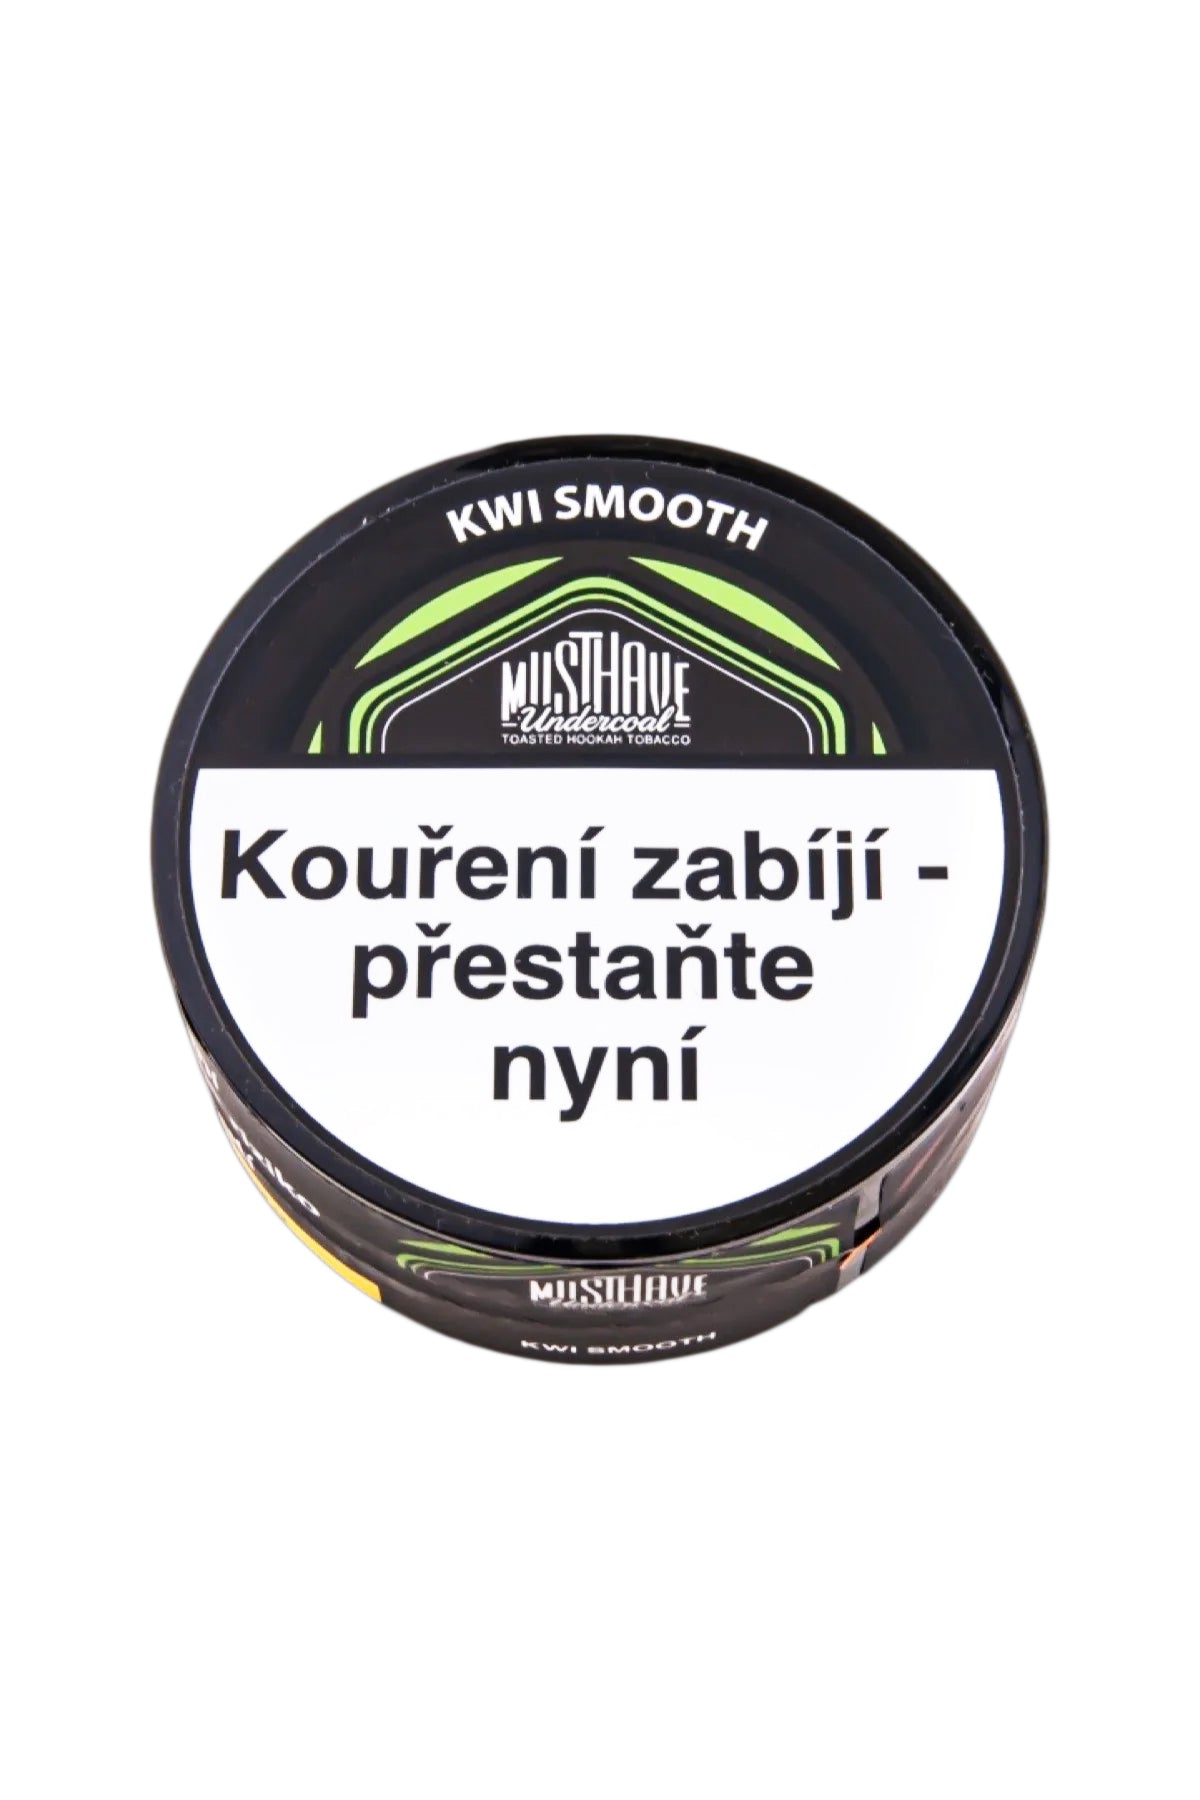 Tabák - MustH 125g - Kwi Smooth